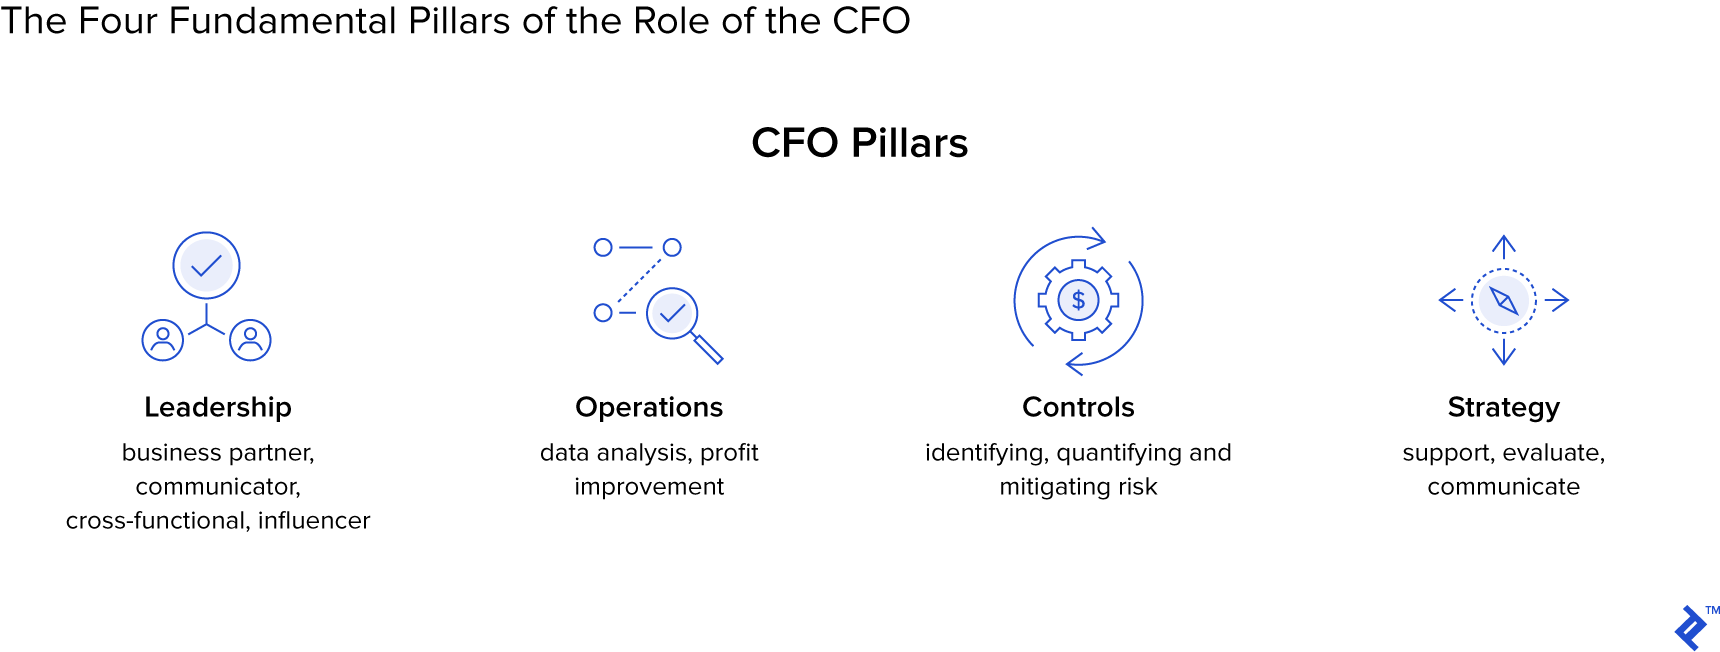 A successful CFO fulfills multiple duties across several departments.